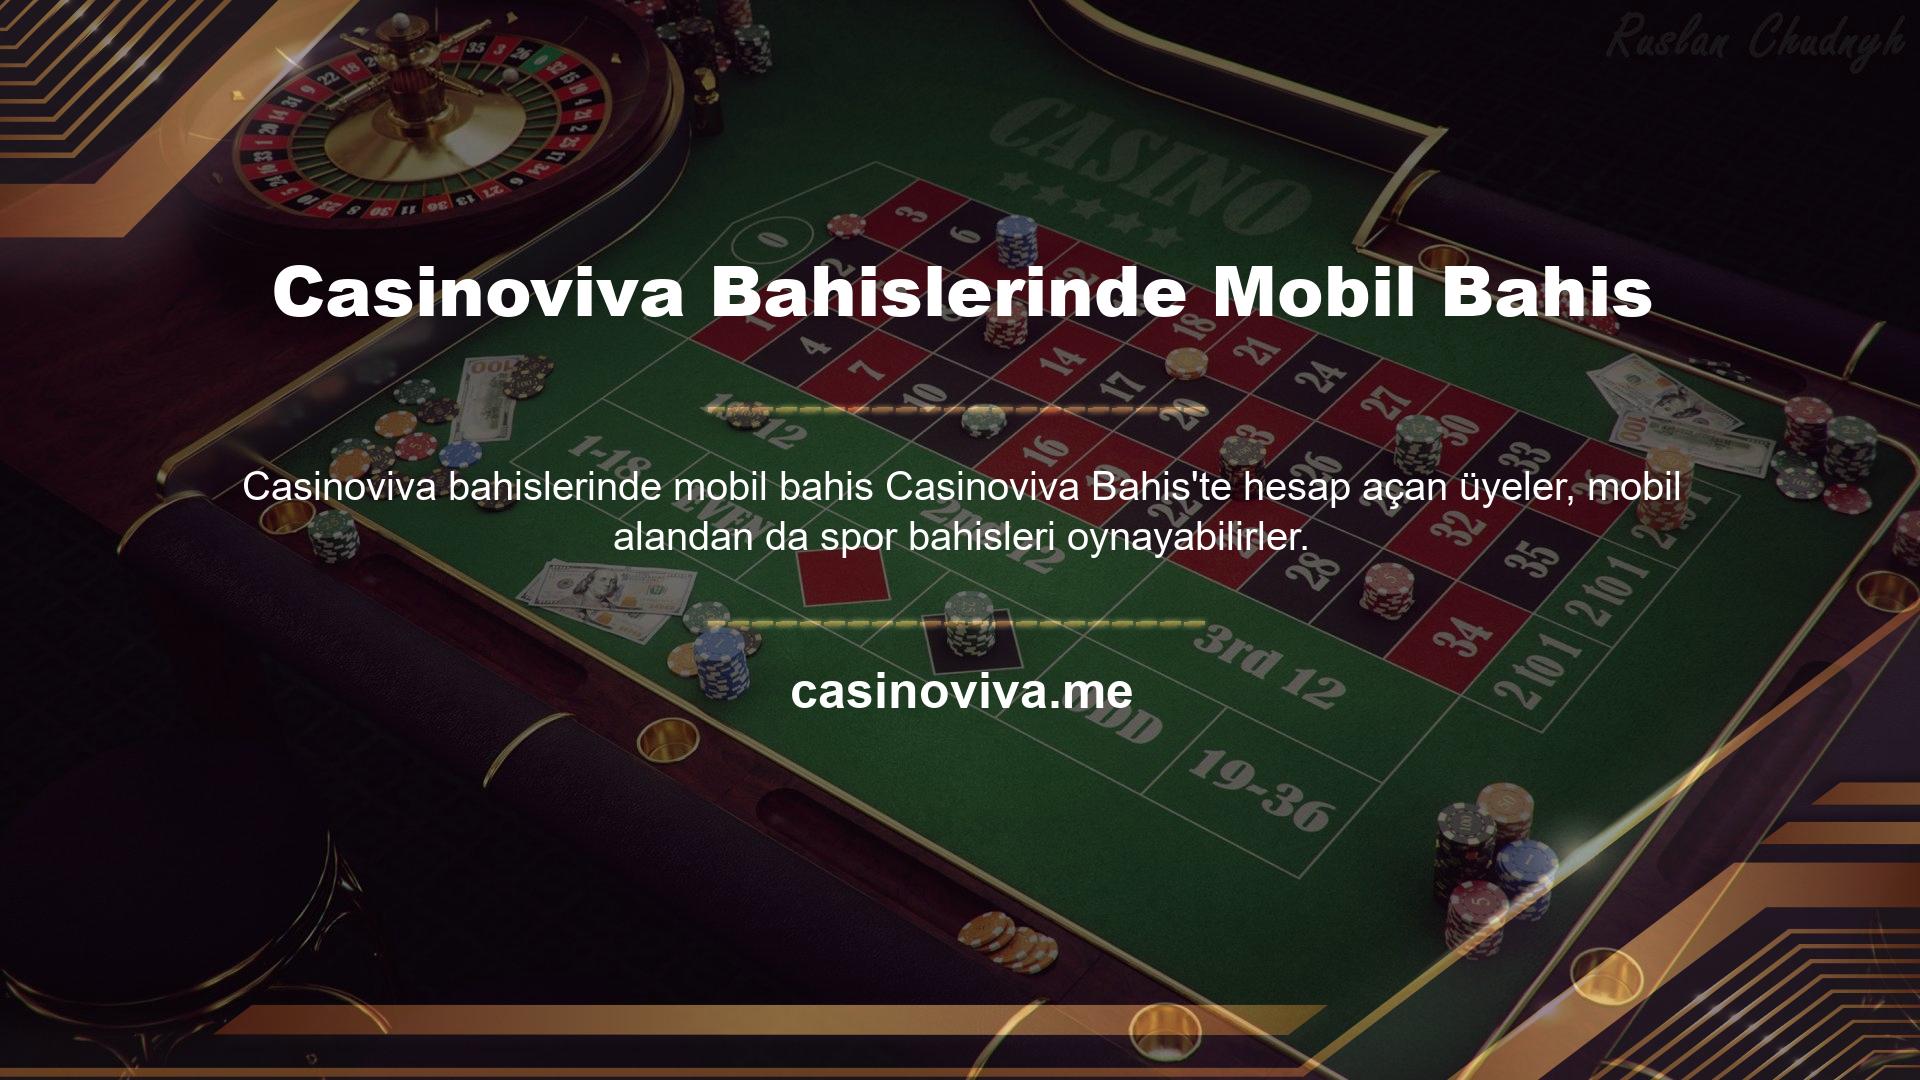 Casinoviva Bahislerinde Mobil Bahis